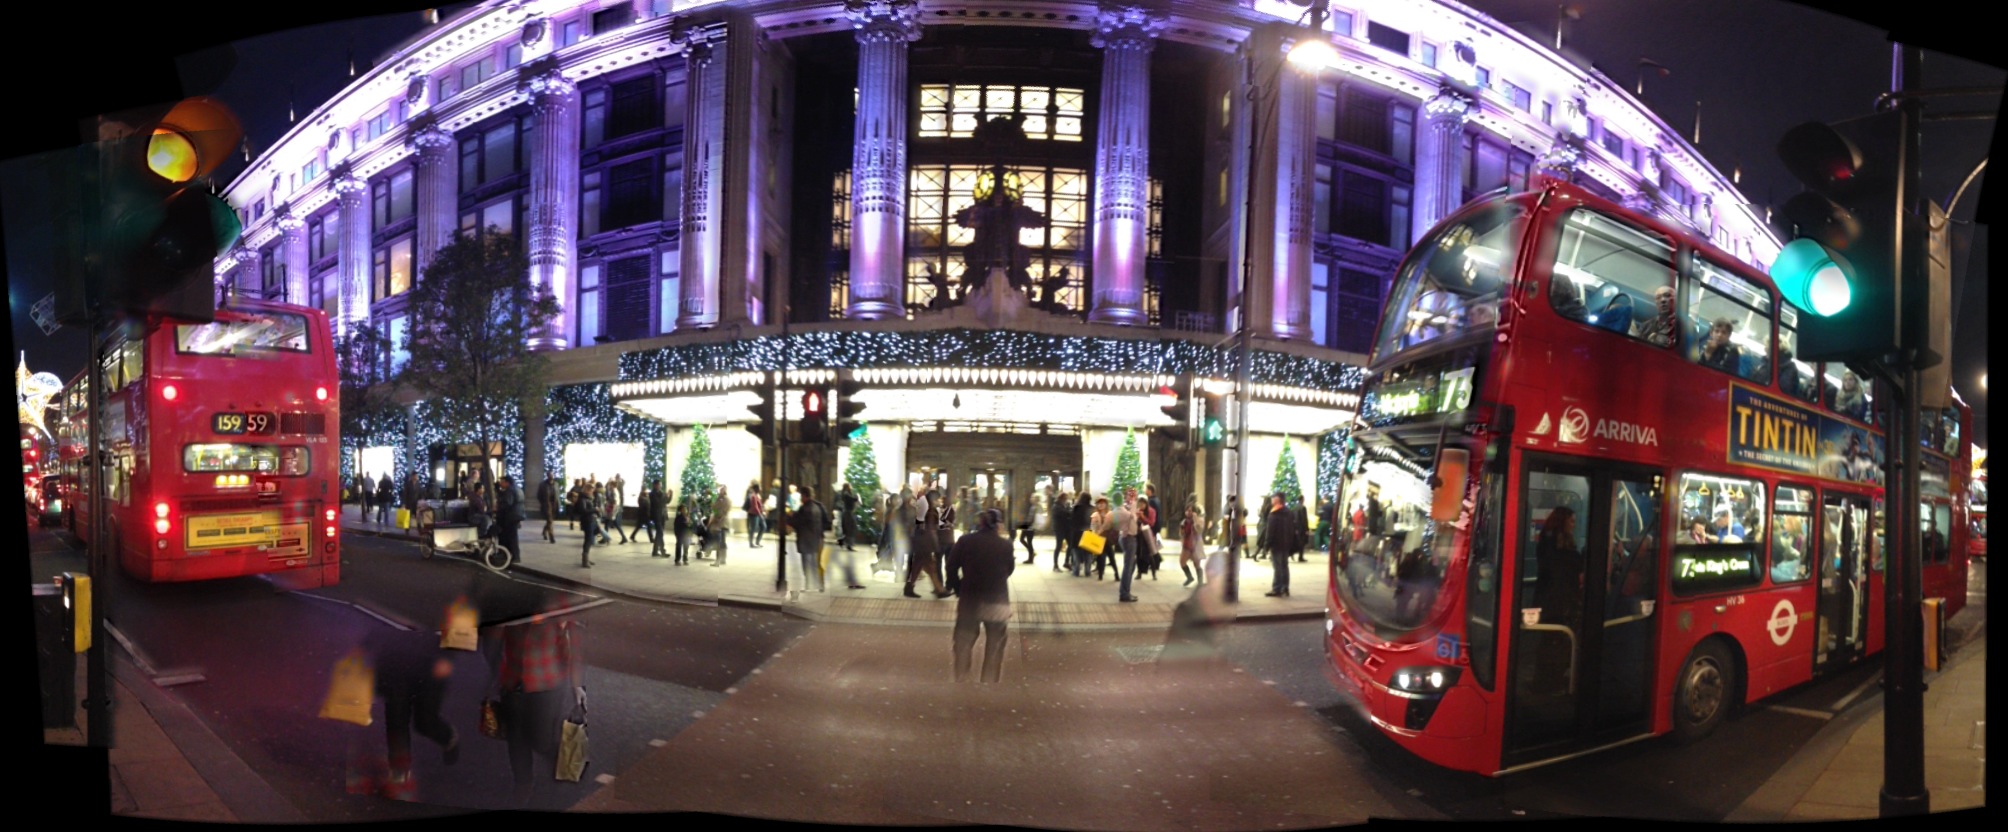 The Christmas Lighting at Selfridges London  london liaison